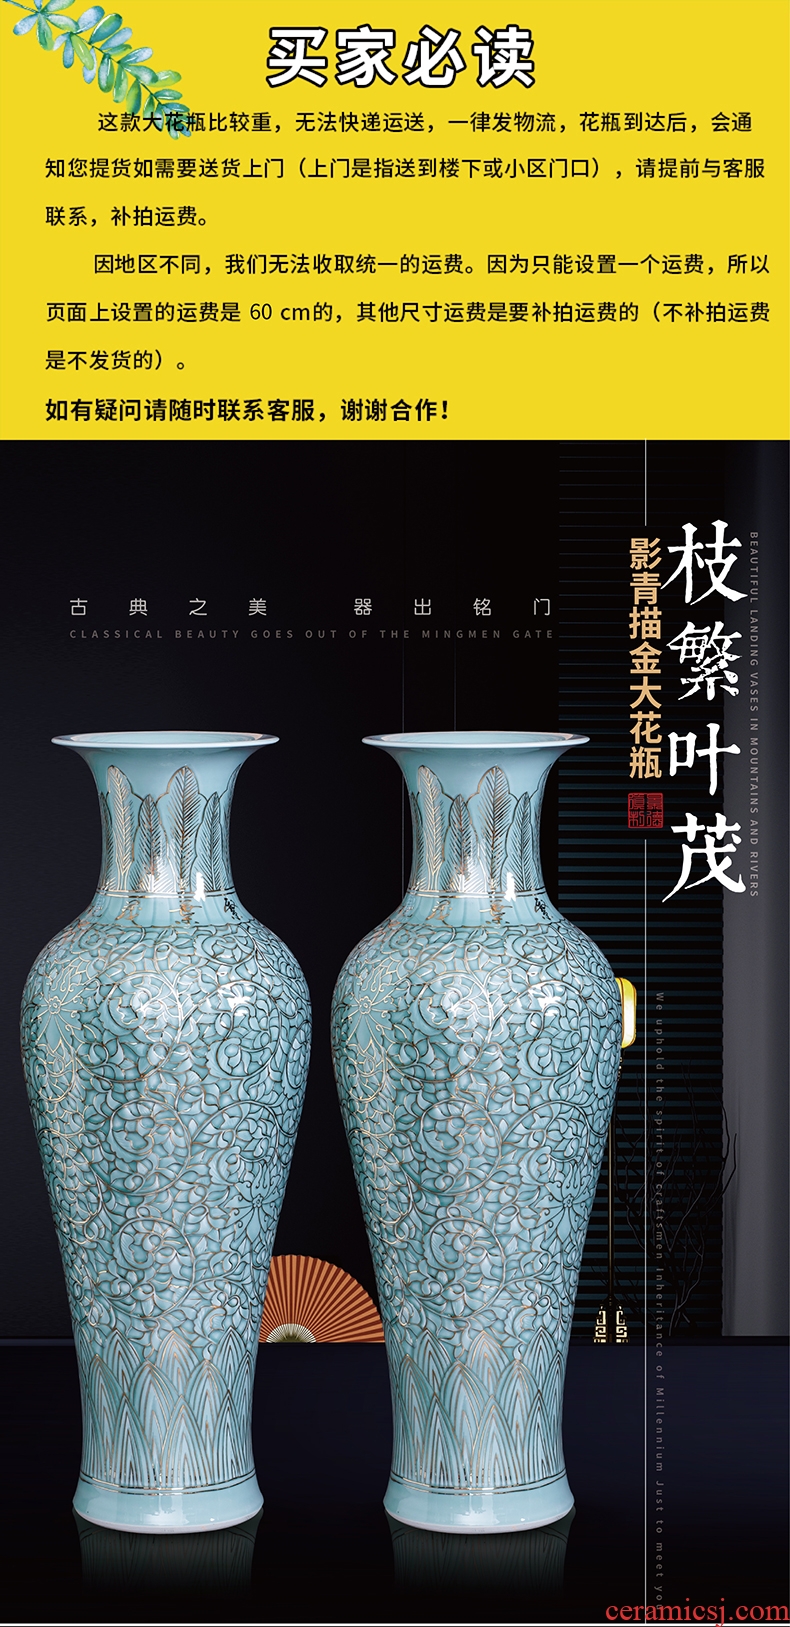 Jingdezhen ceramic general classical fashion tank large vase landed China blue and white porcelain home decoration - 599676994614